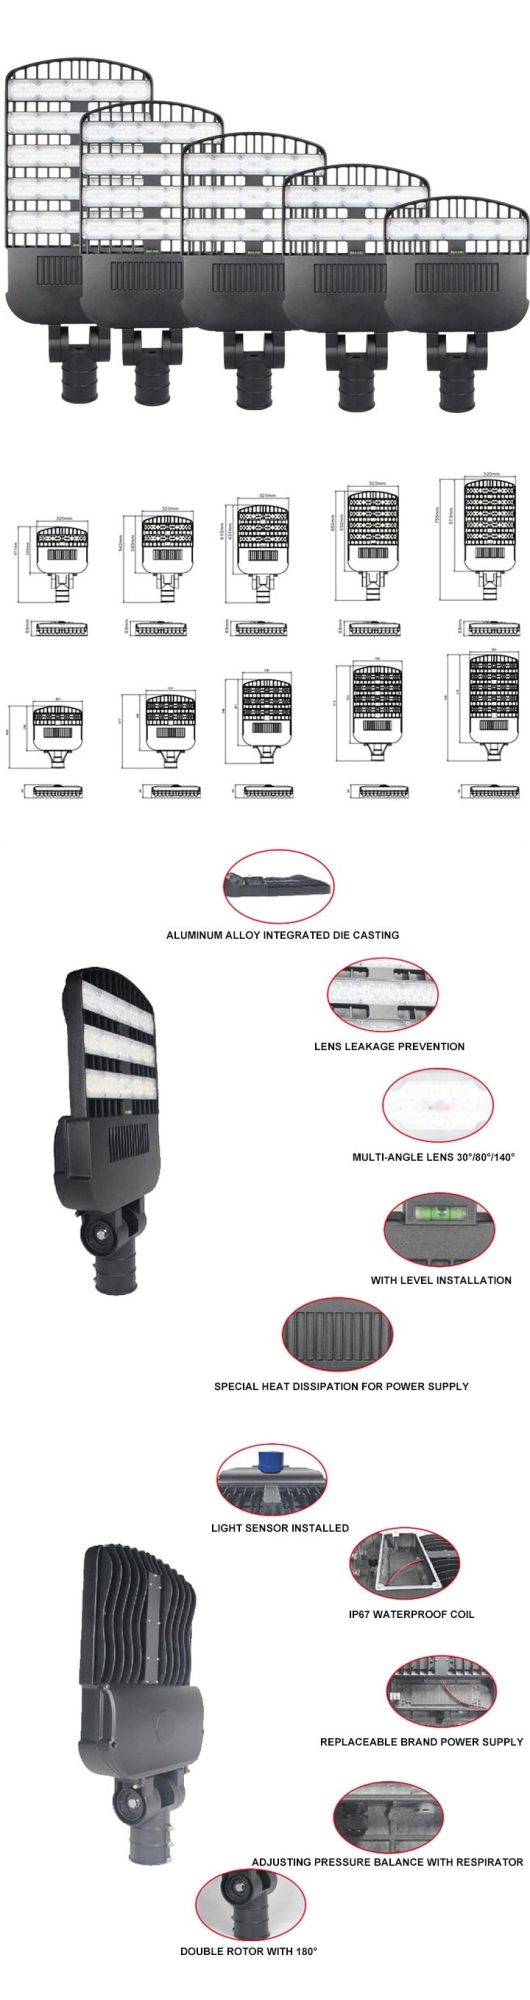 Hpzm Outdoor Light Waterproof IP67 100W LED Street Light